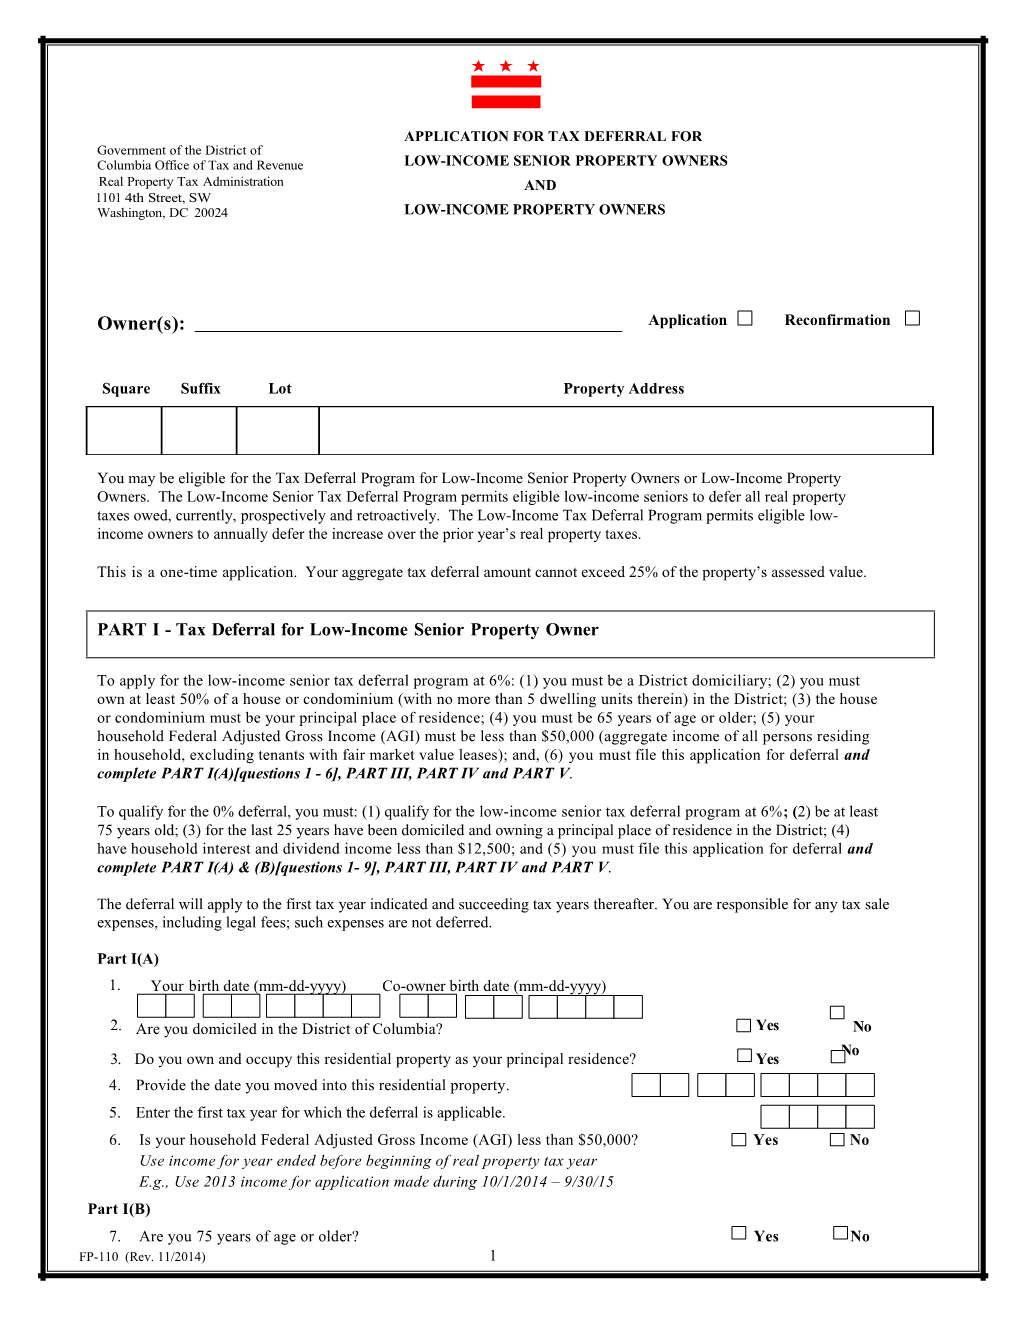 Tax Deferral Form 2006